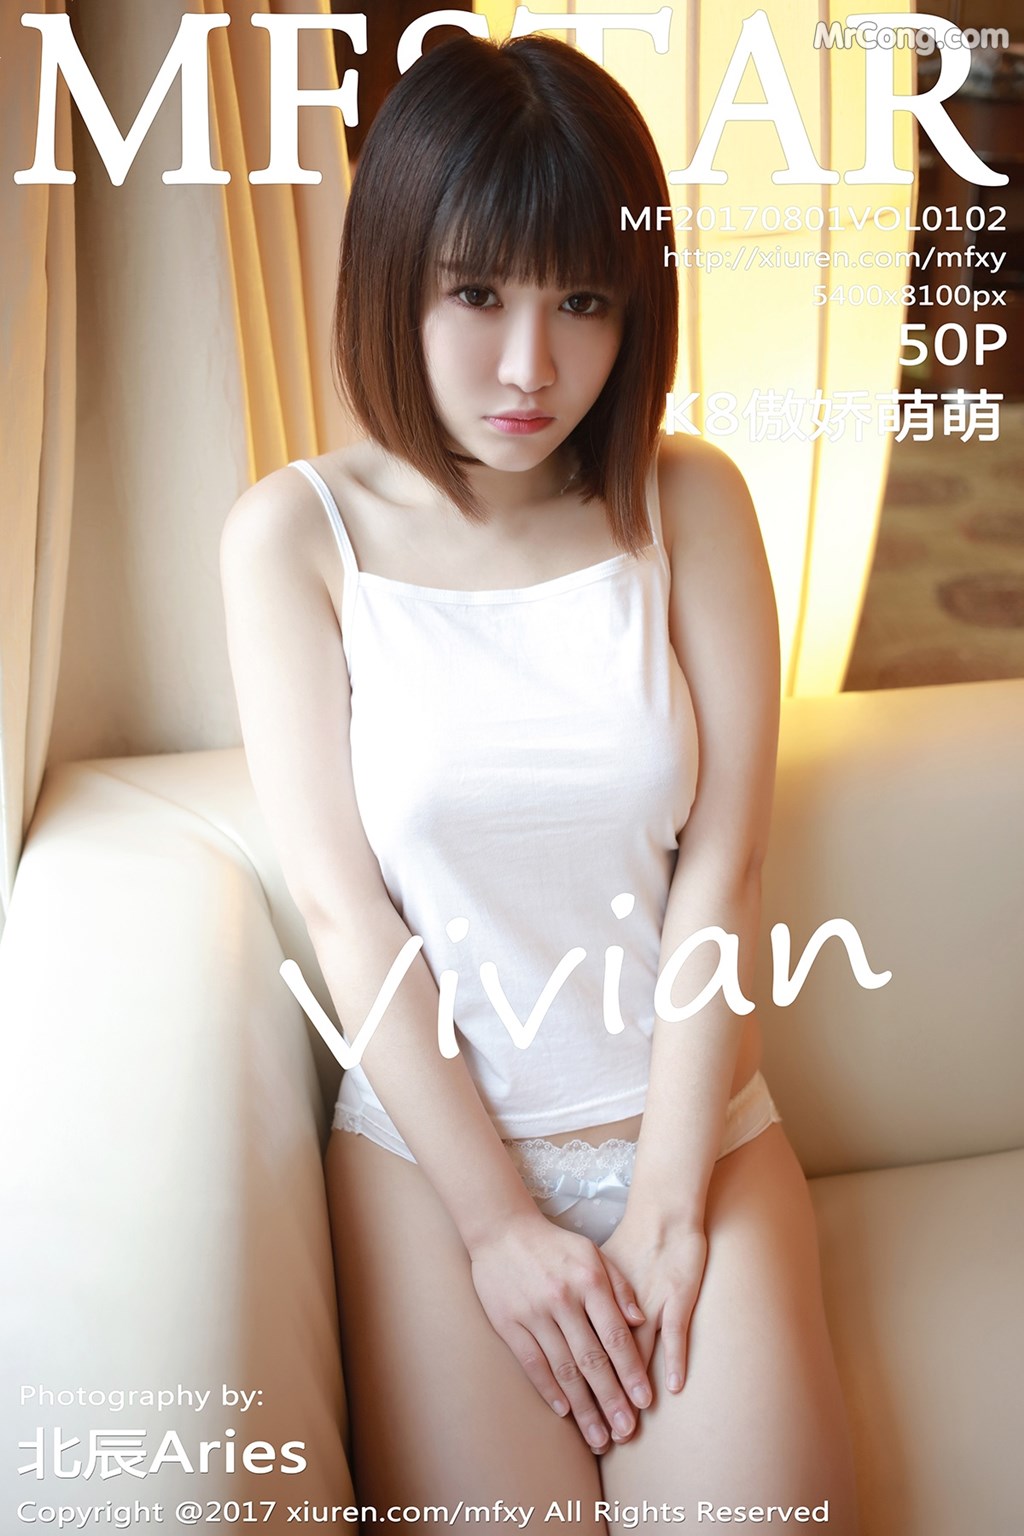 MFStar Vol.102: Model Aojiao Meng Meng (K8 傲 娇 萌萌 Vivian) (51 photos) photo 1-0